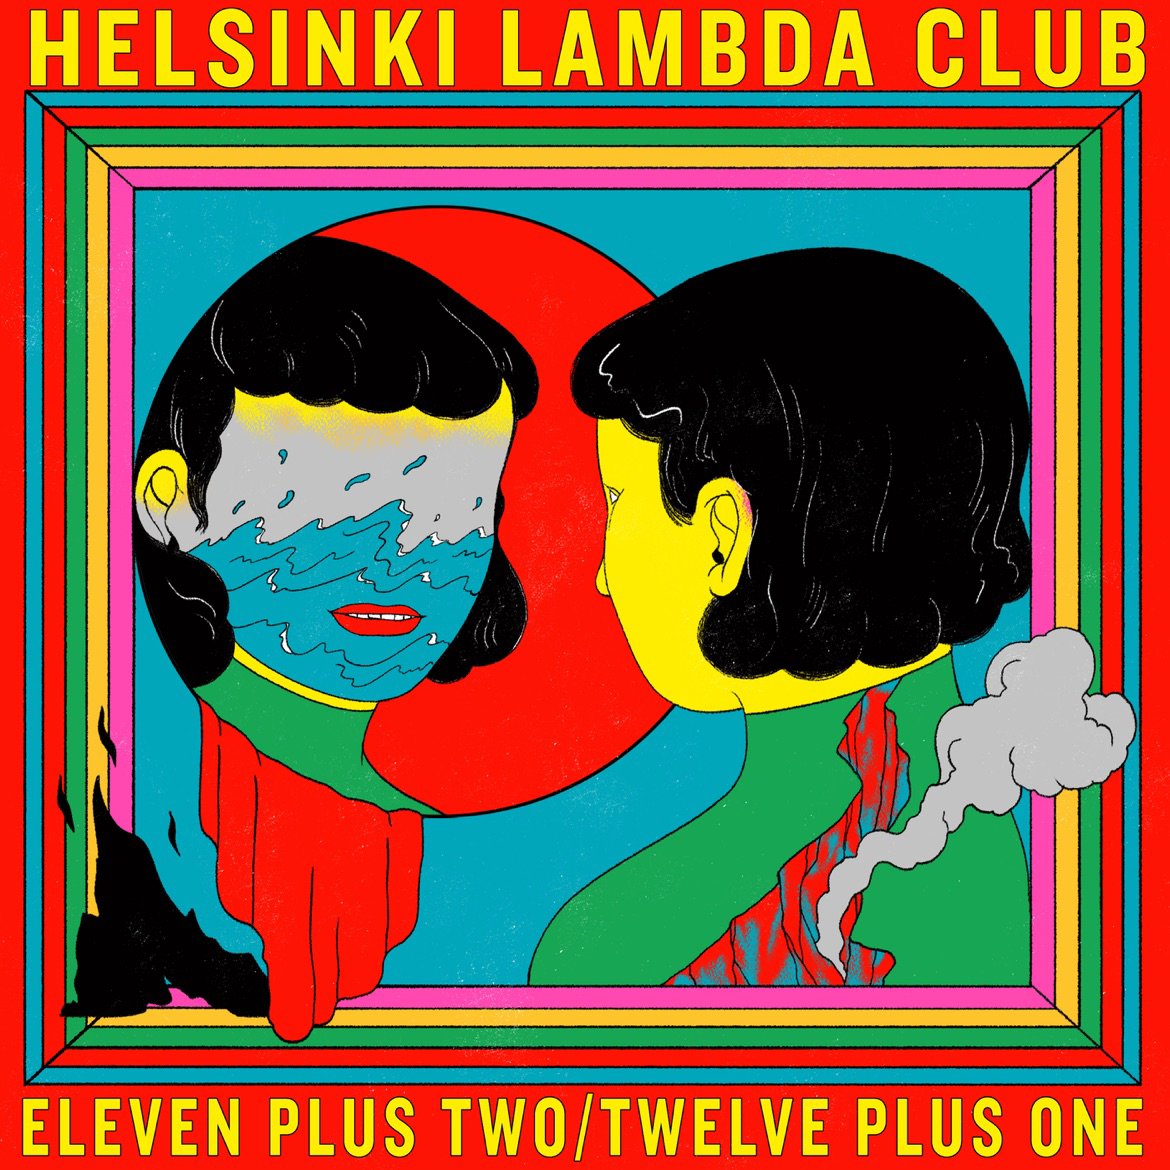 #nowplaying Helsinki Lambda Club - Mind The Gap / Eleven Plus Two / Twelve Plus One https://t.co/DutJosii8F